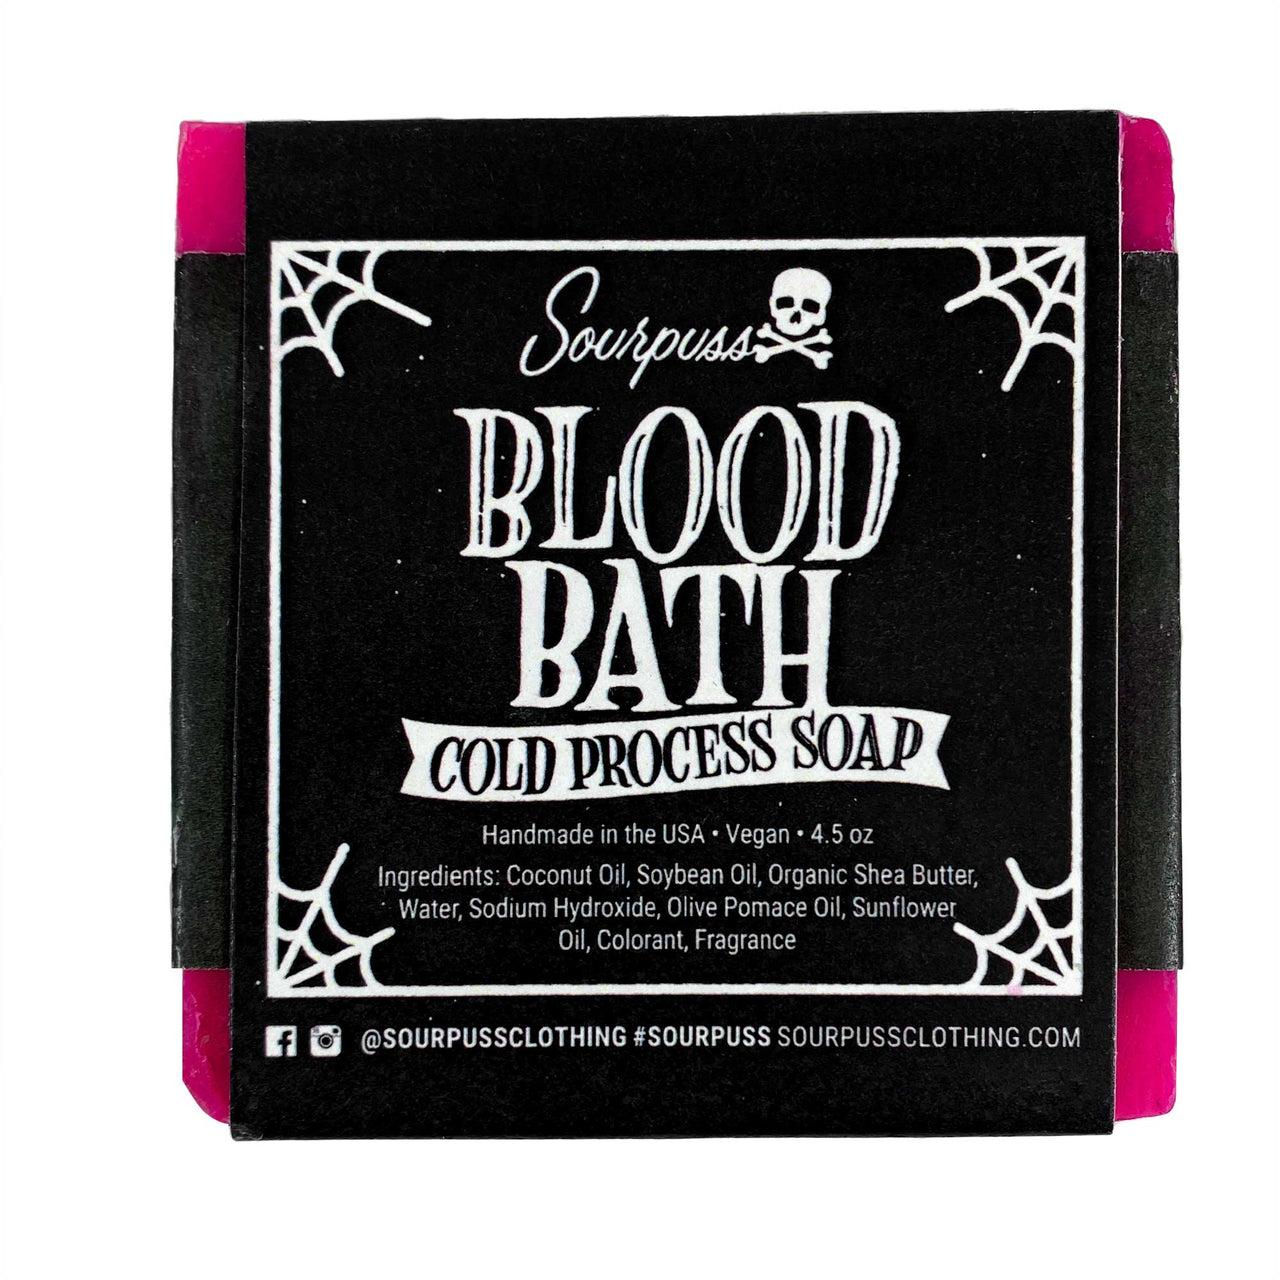 SOURPUSS BLOOD BATH BAR SOAP